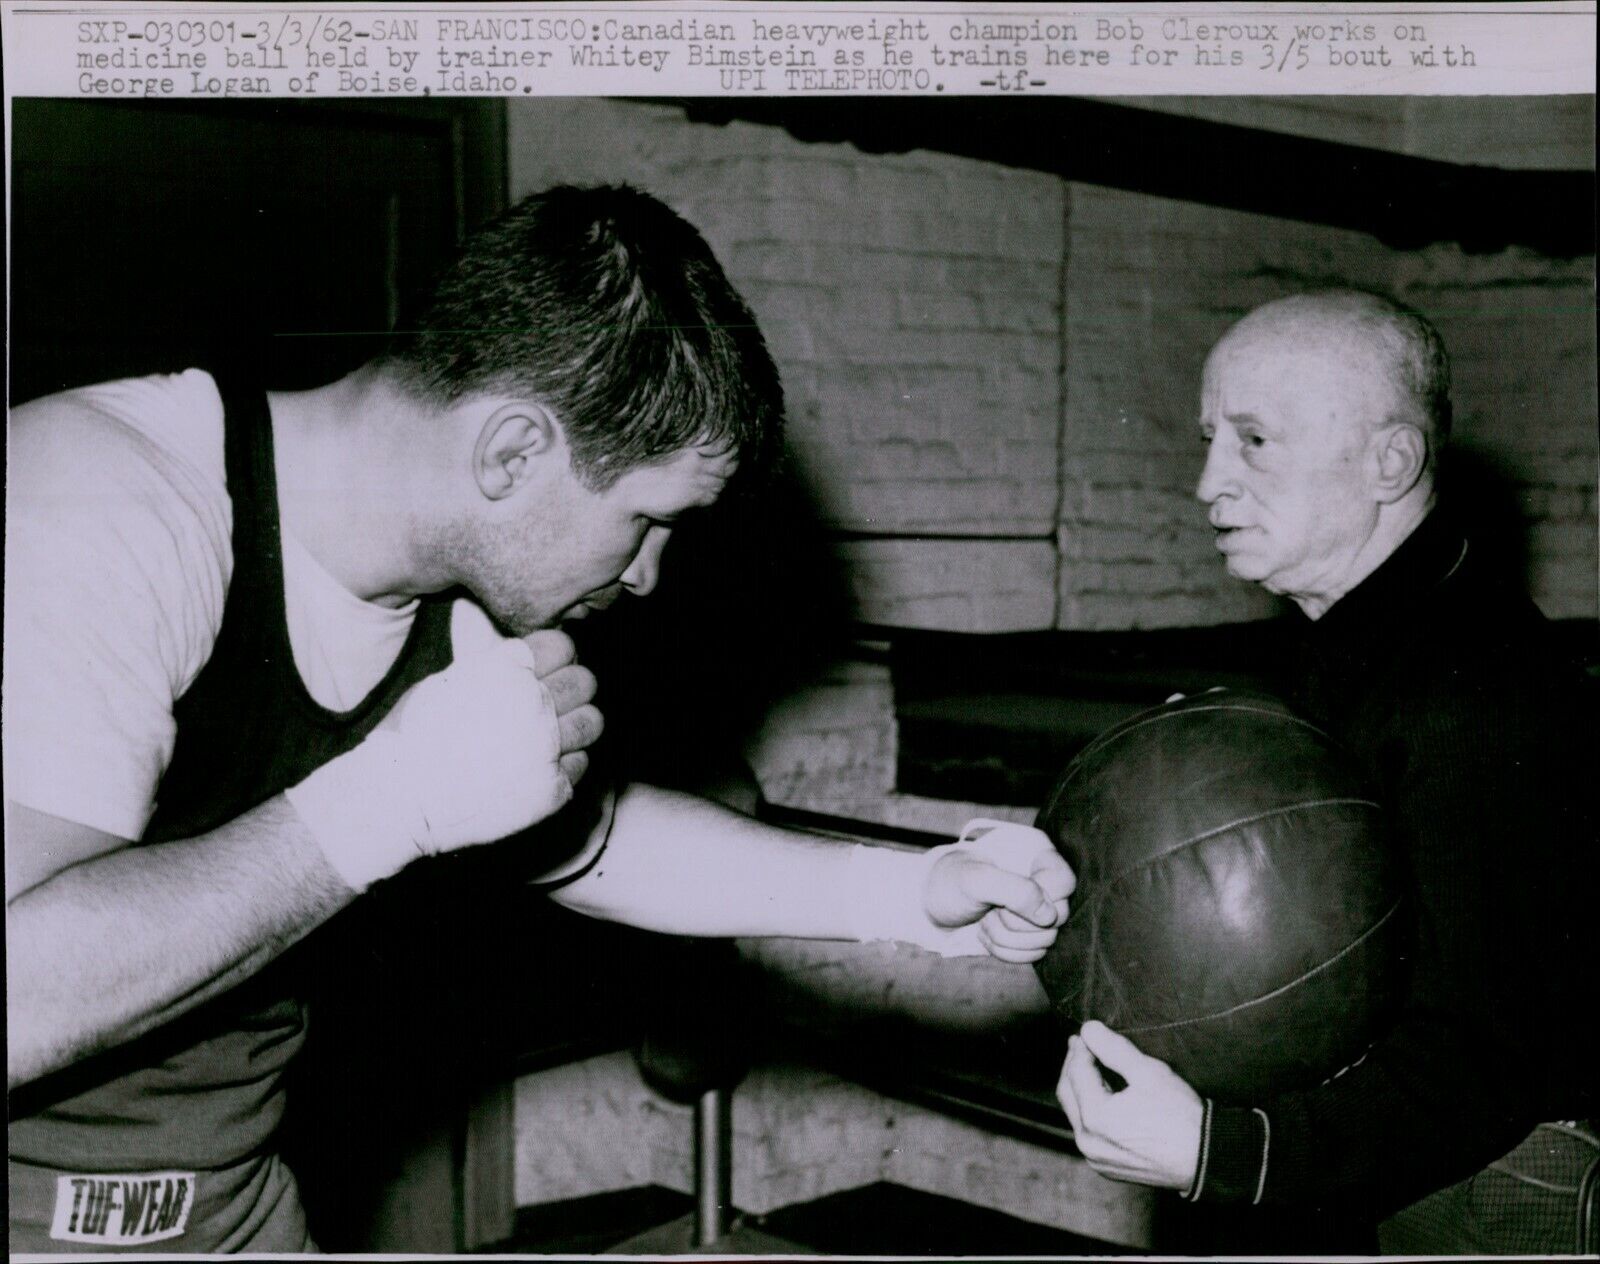 LG810 1962 Wire Photo BOB CLEROUX WHITEY BIMSTEIN Heavyweight Boxing Training